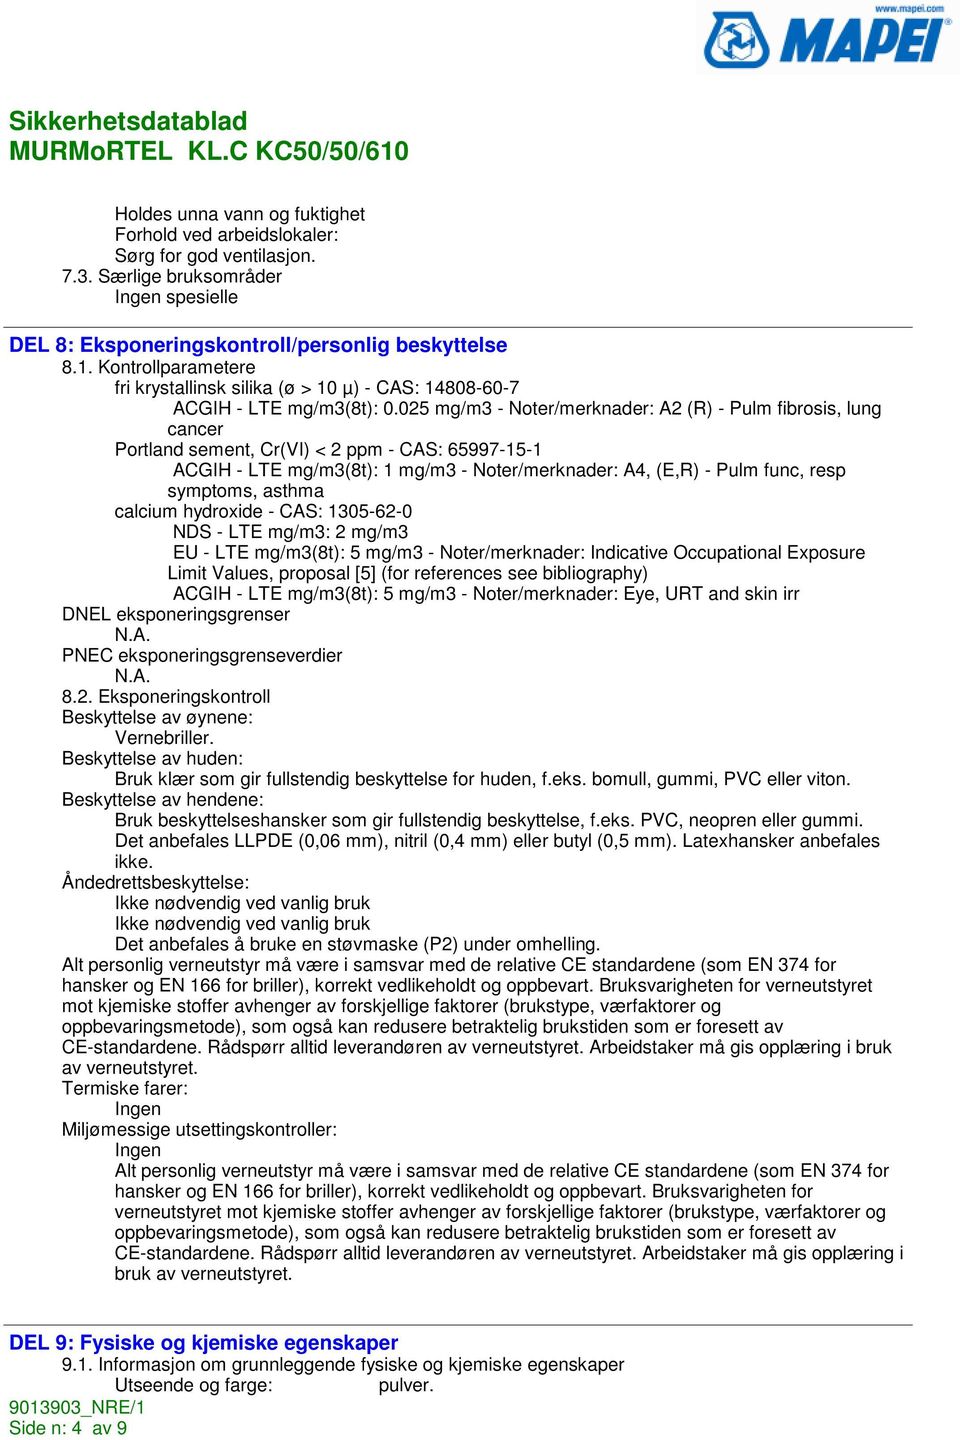 025 mg/m3 - Noter/merknader: A2 (R) - Pulm fibrosis, lung cancer Portland sement, Cr(VI) < 2 ppm - CAS: 65997-15-1 ACGIH - LTE mg/m3(8t): 1 mg/m3 - Noter/merknader: A4, (E,R) - Pulm func, resp